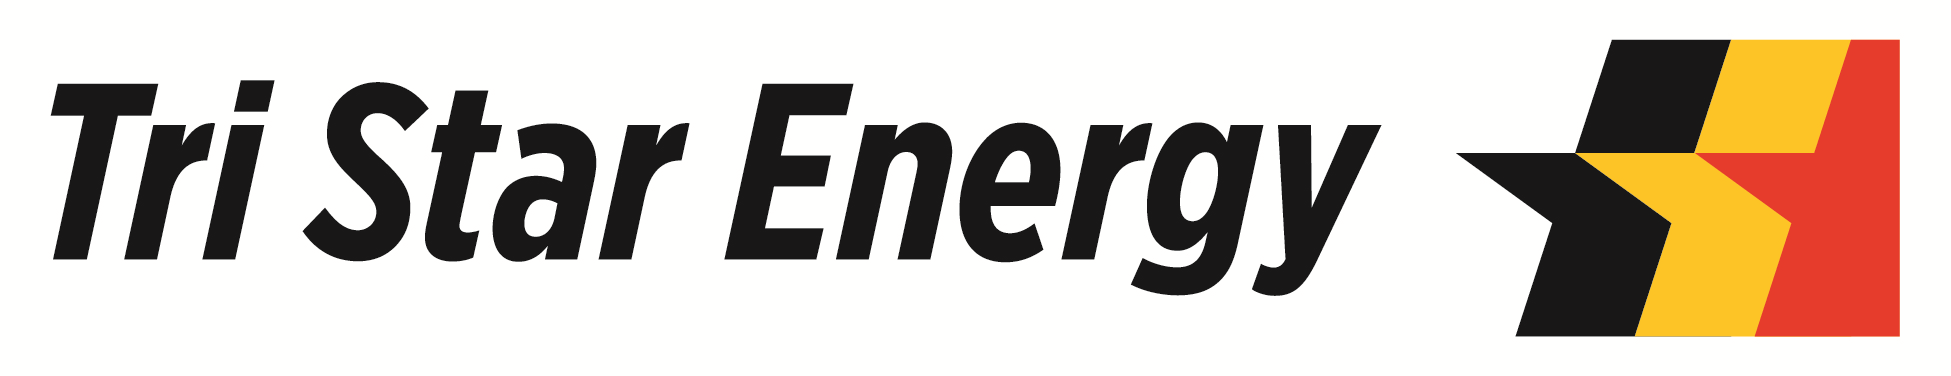 Tri Star Energy logo